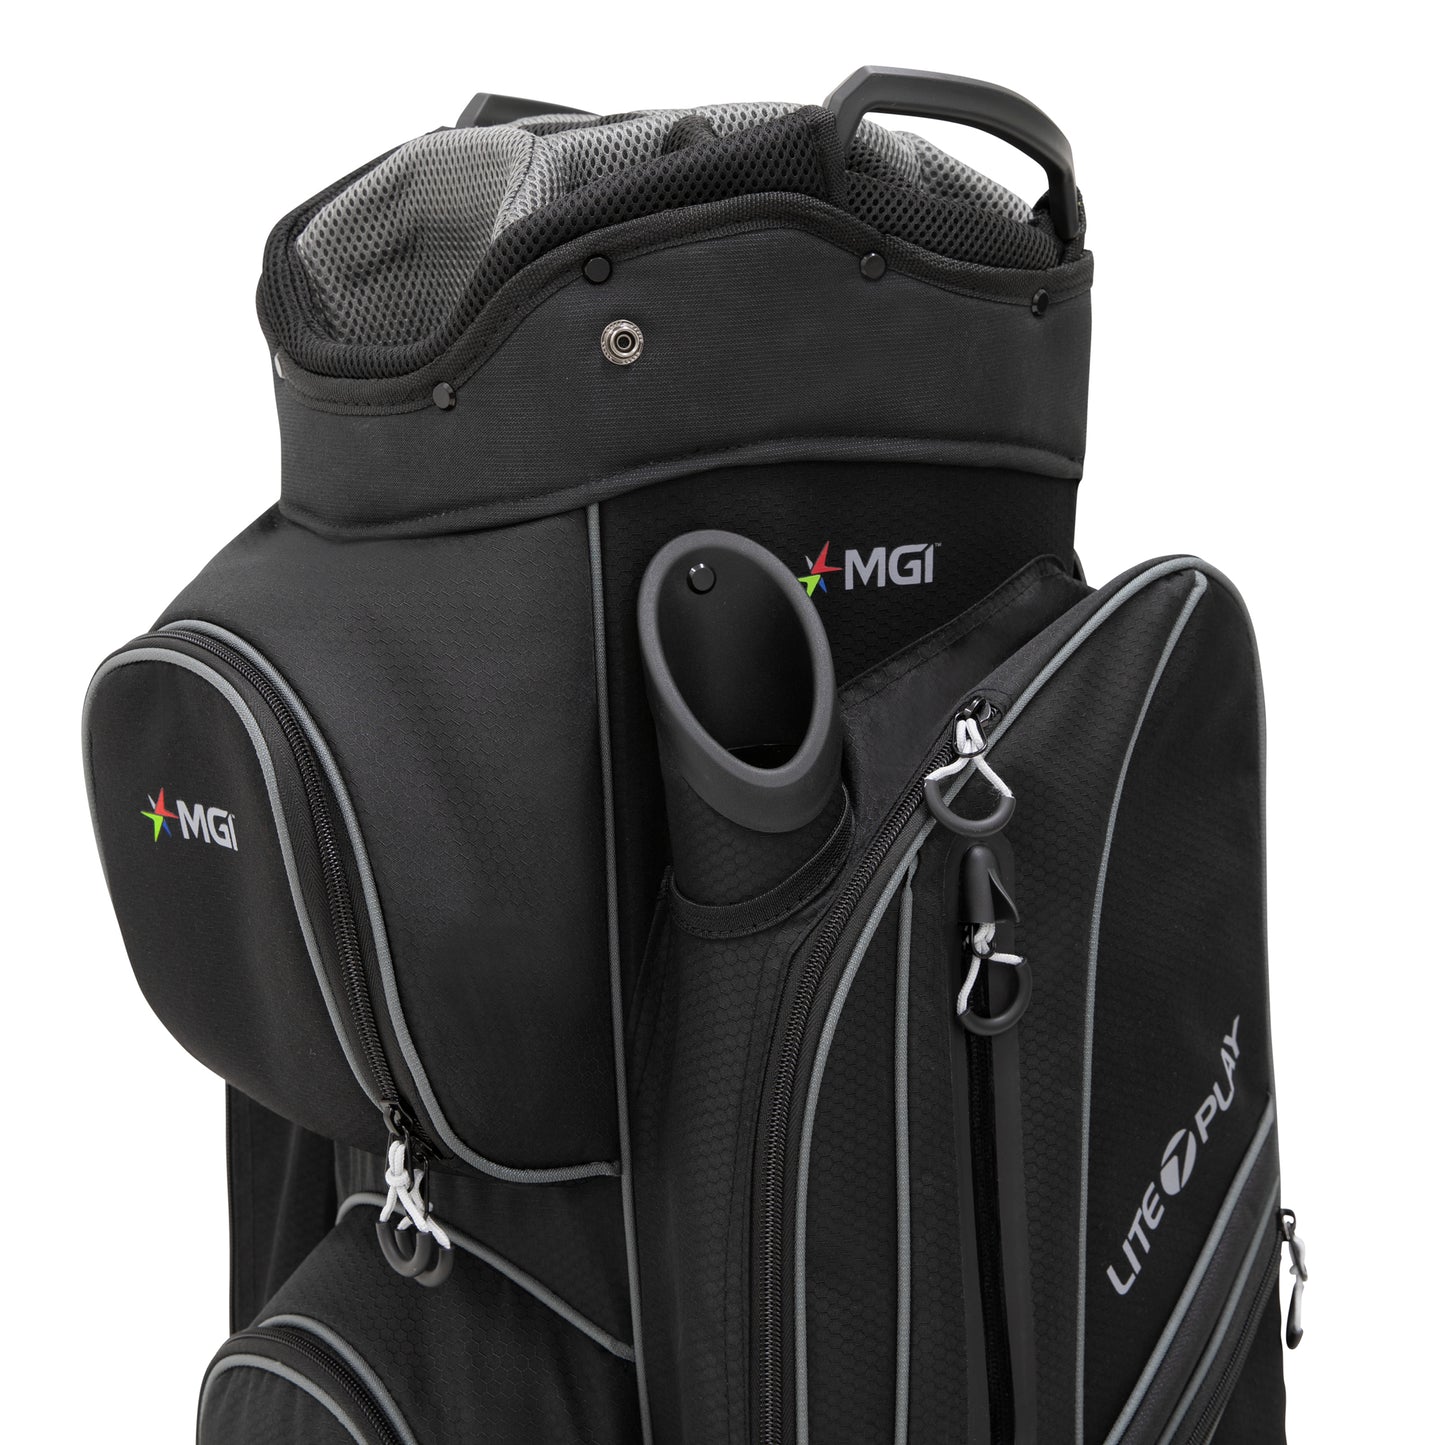 
                  
                    MGI LITE-PLAY Golf Bag
                  
                